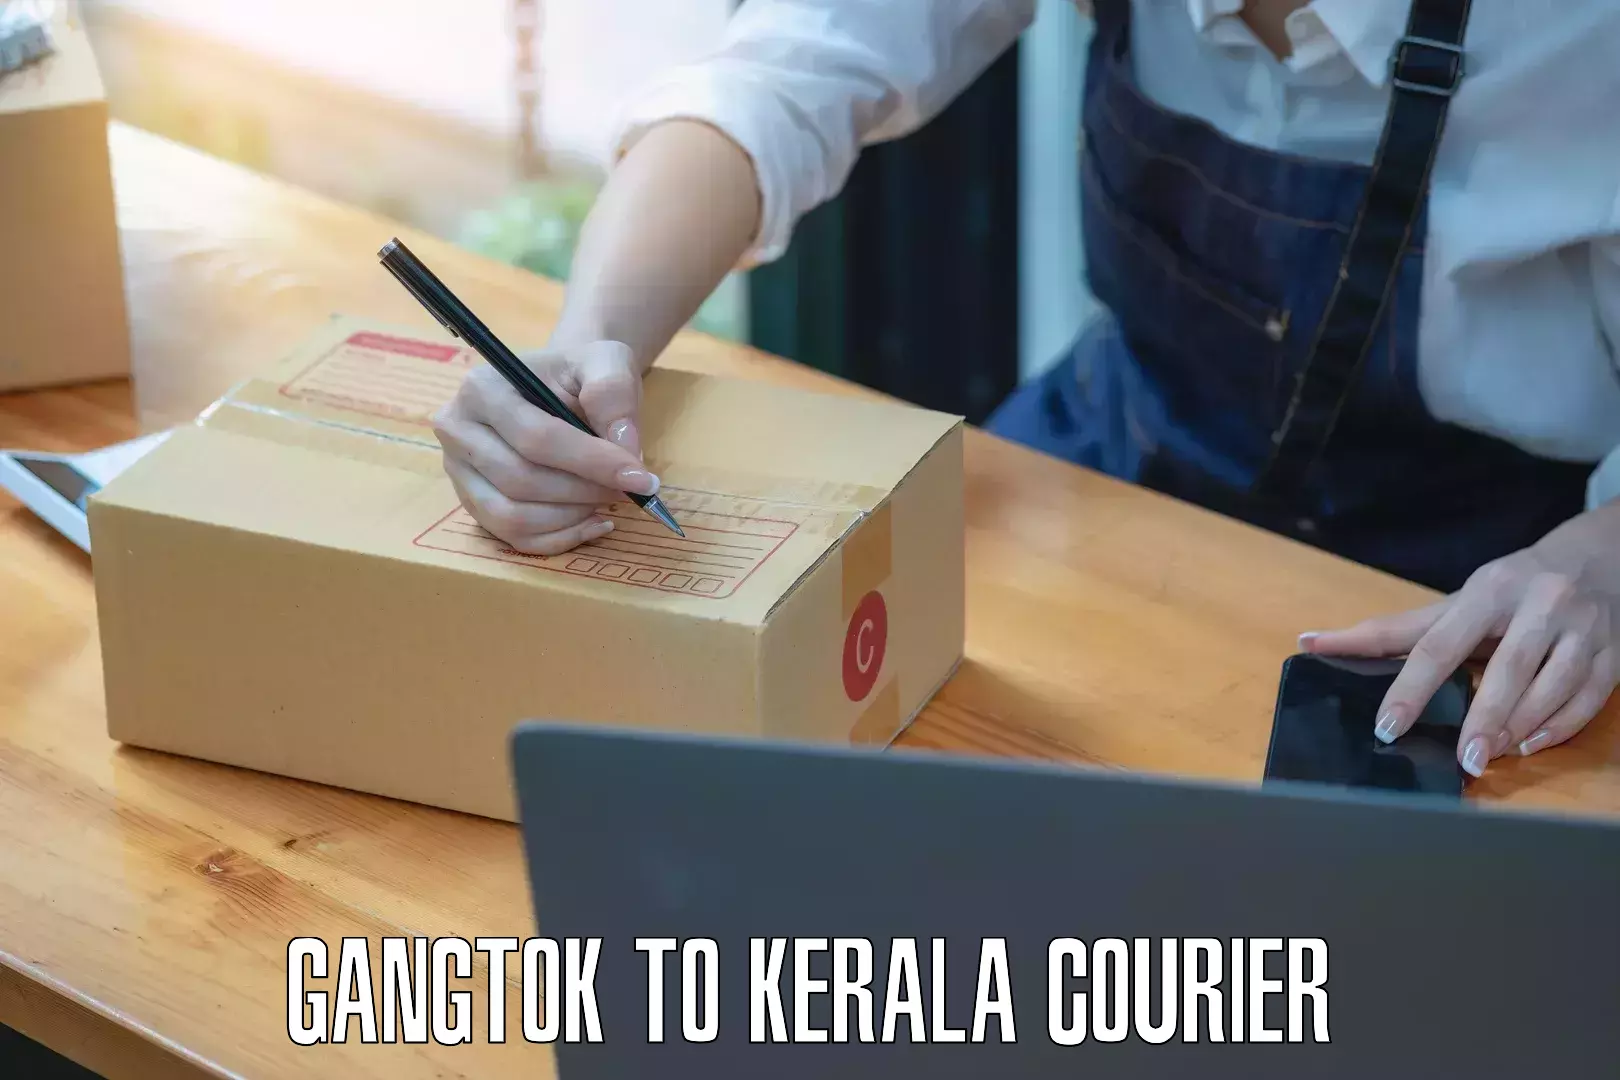 Efficient order fulfillment Gangtok to Kerala